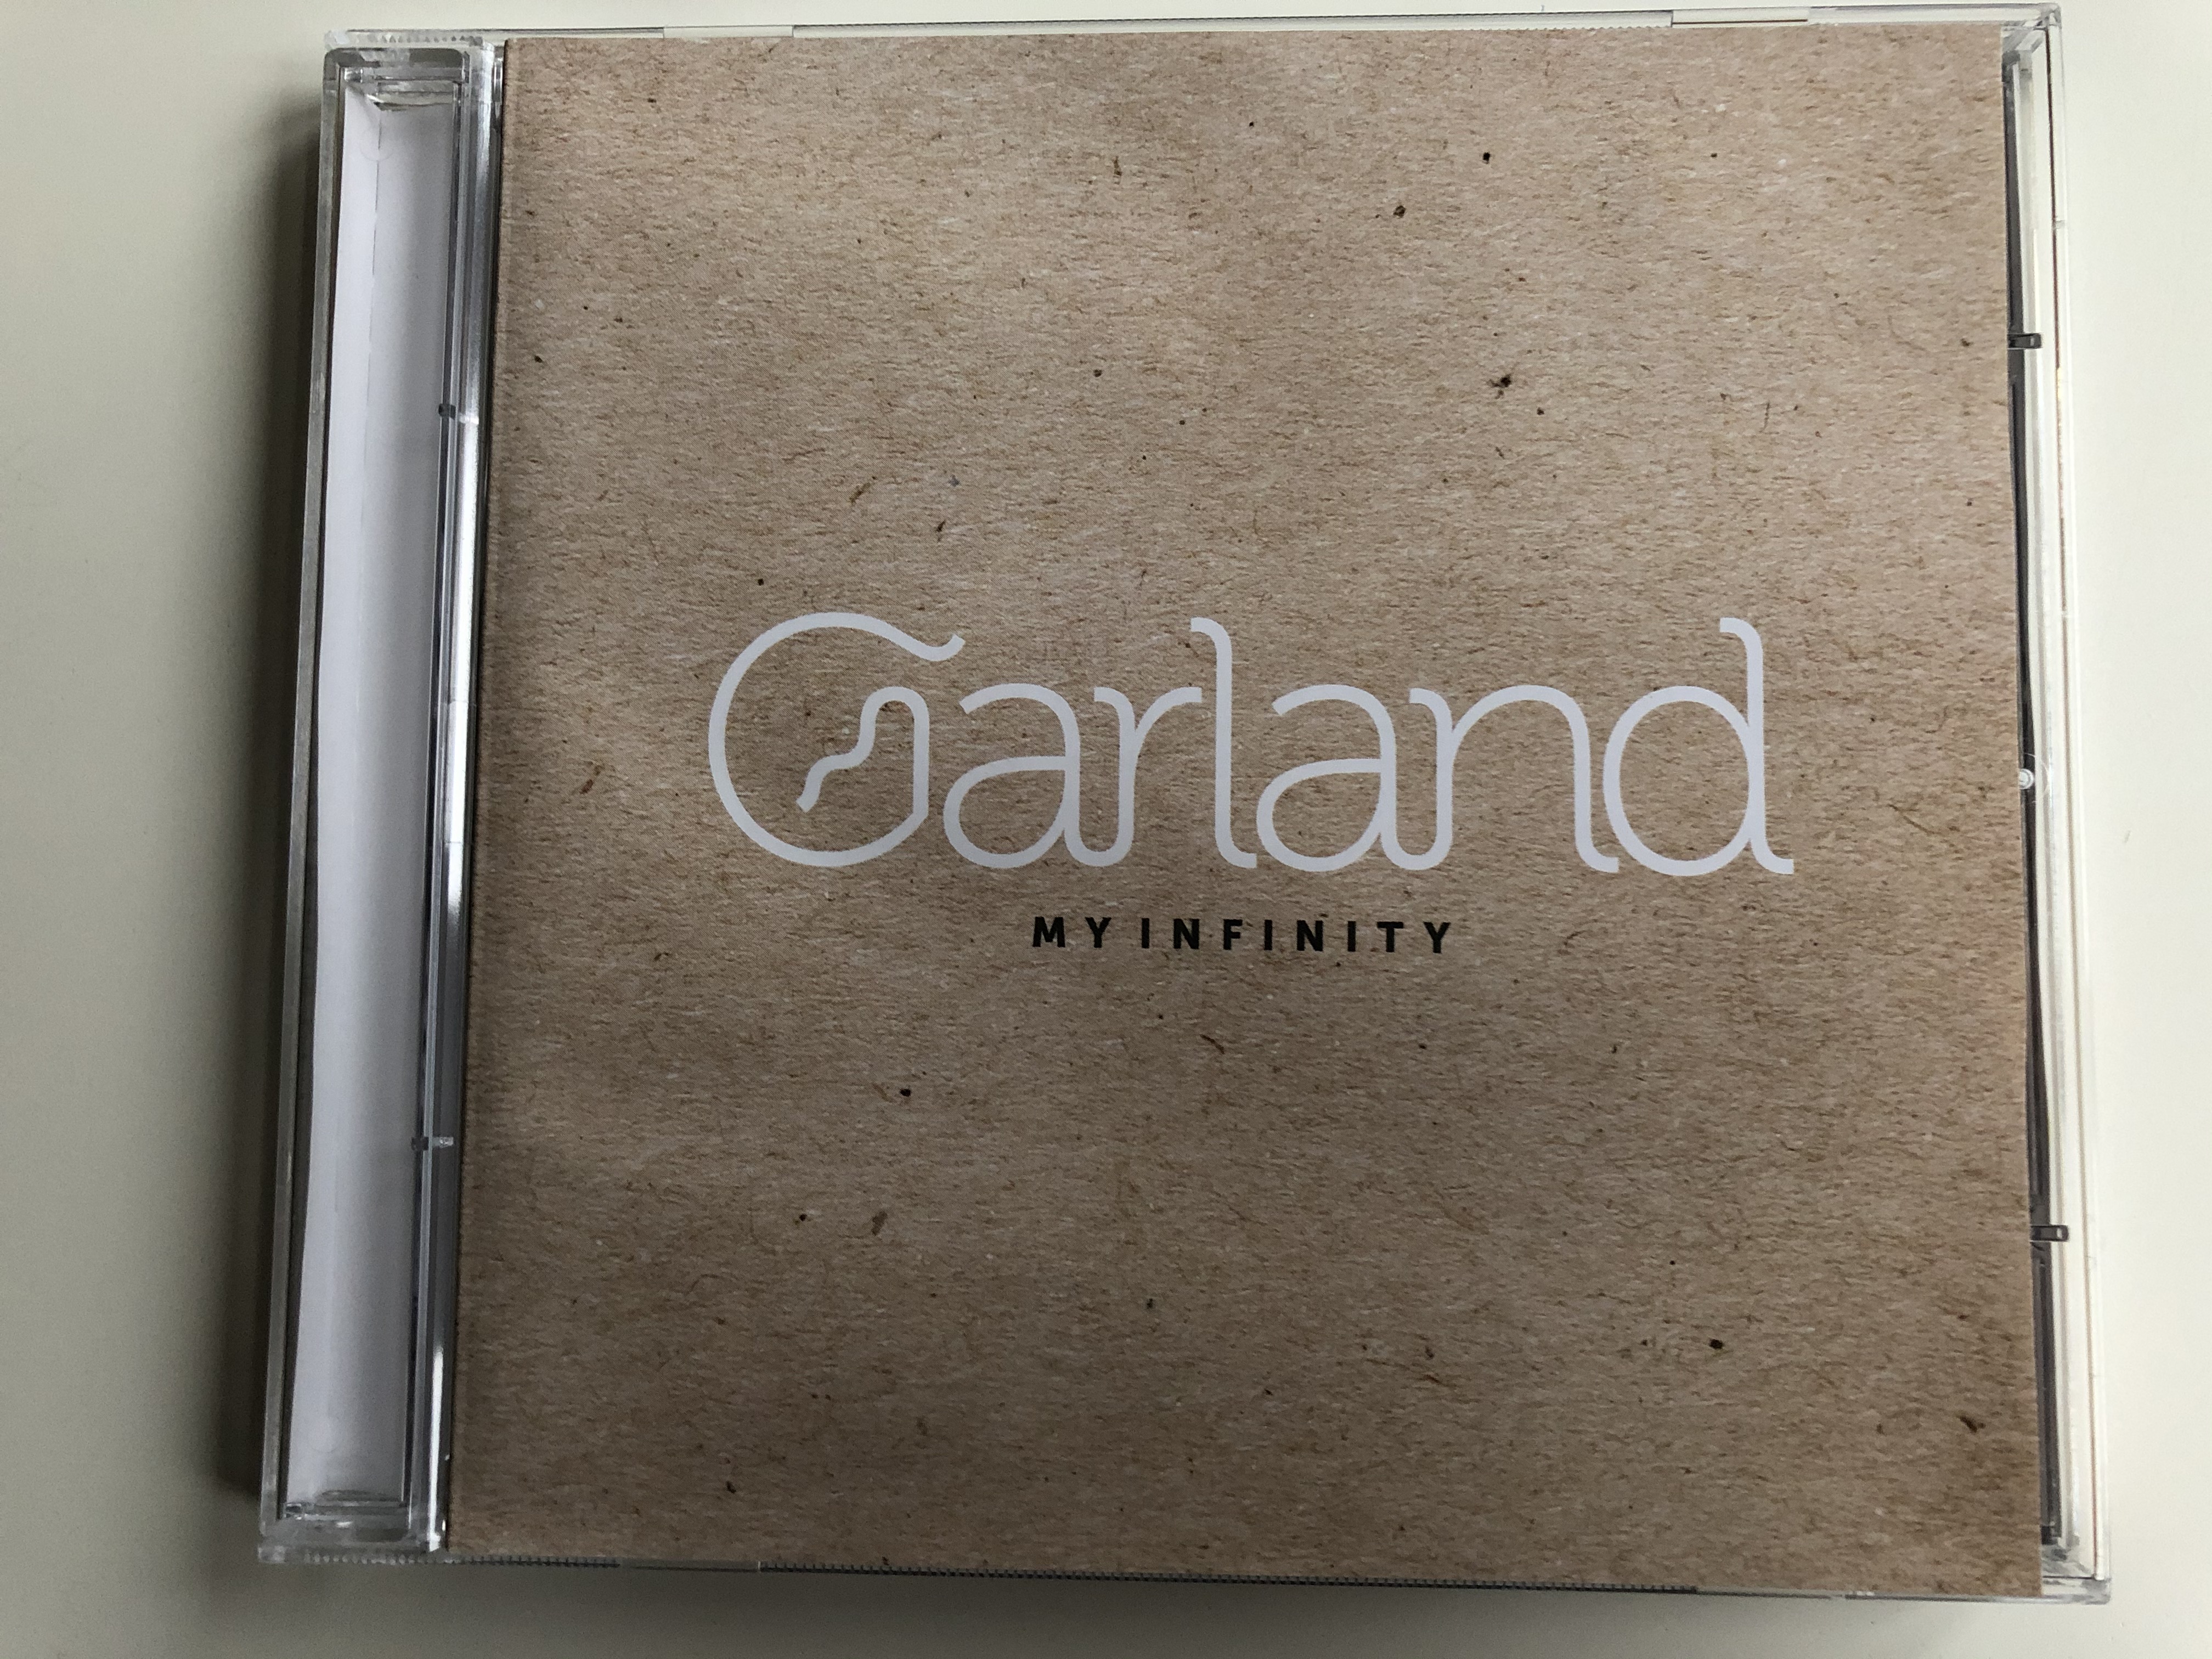 garland-my-infinity-hunnia-records-film-production-audio-cd-2015-hrcd-1513-1-.jpg